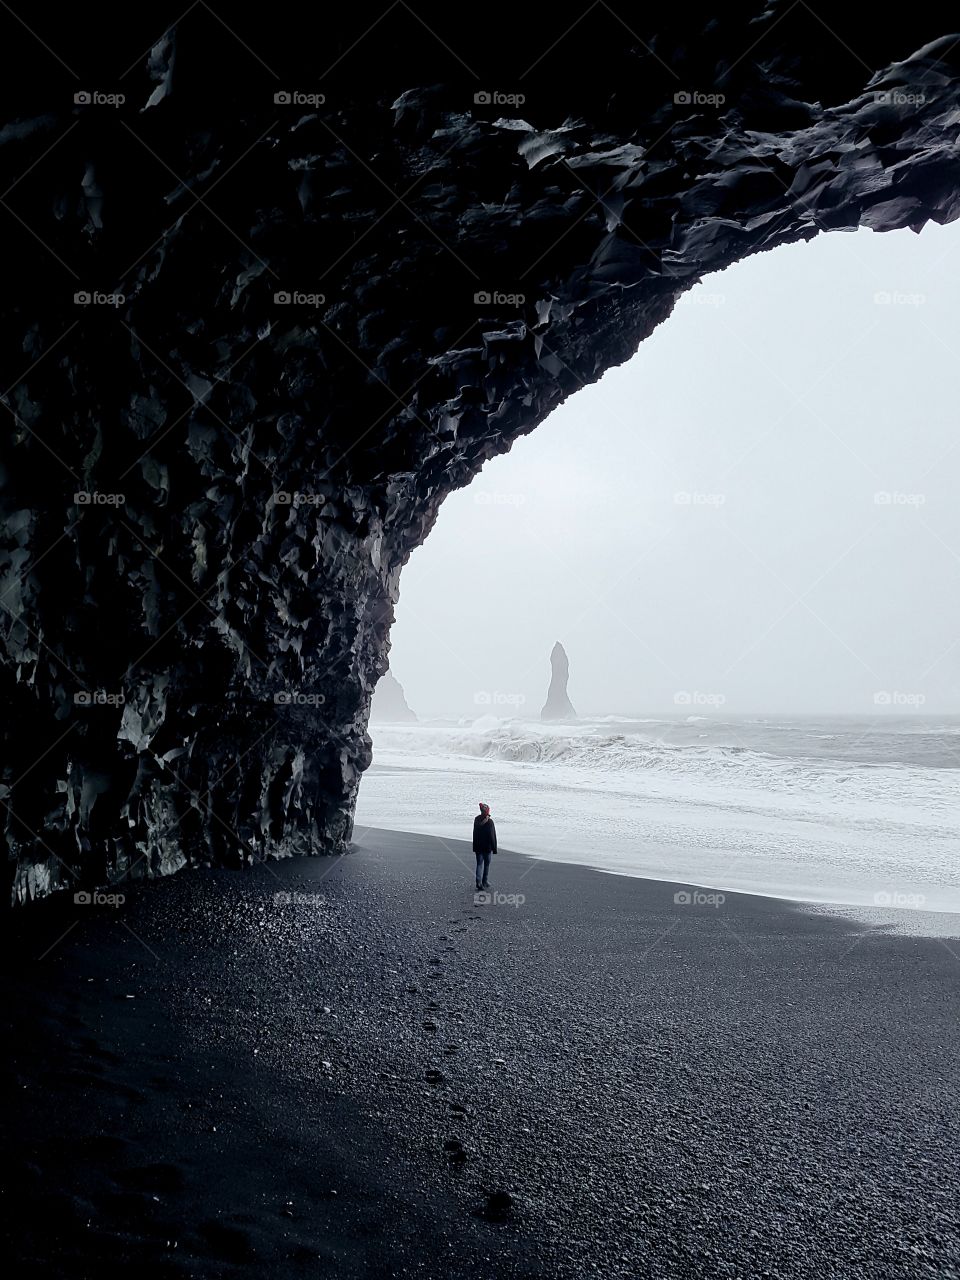 Reynisfjara black beach in Iceland